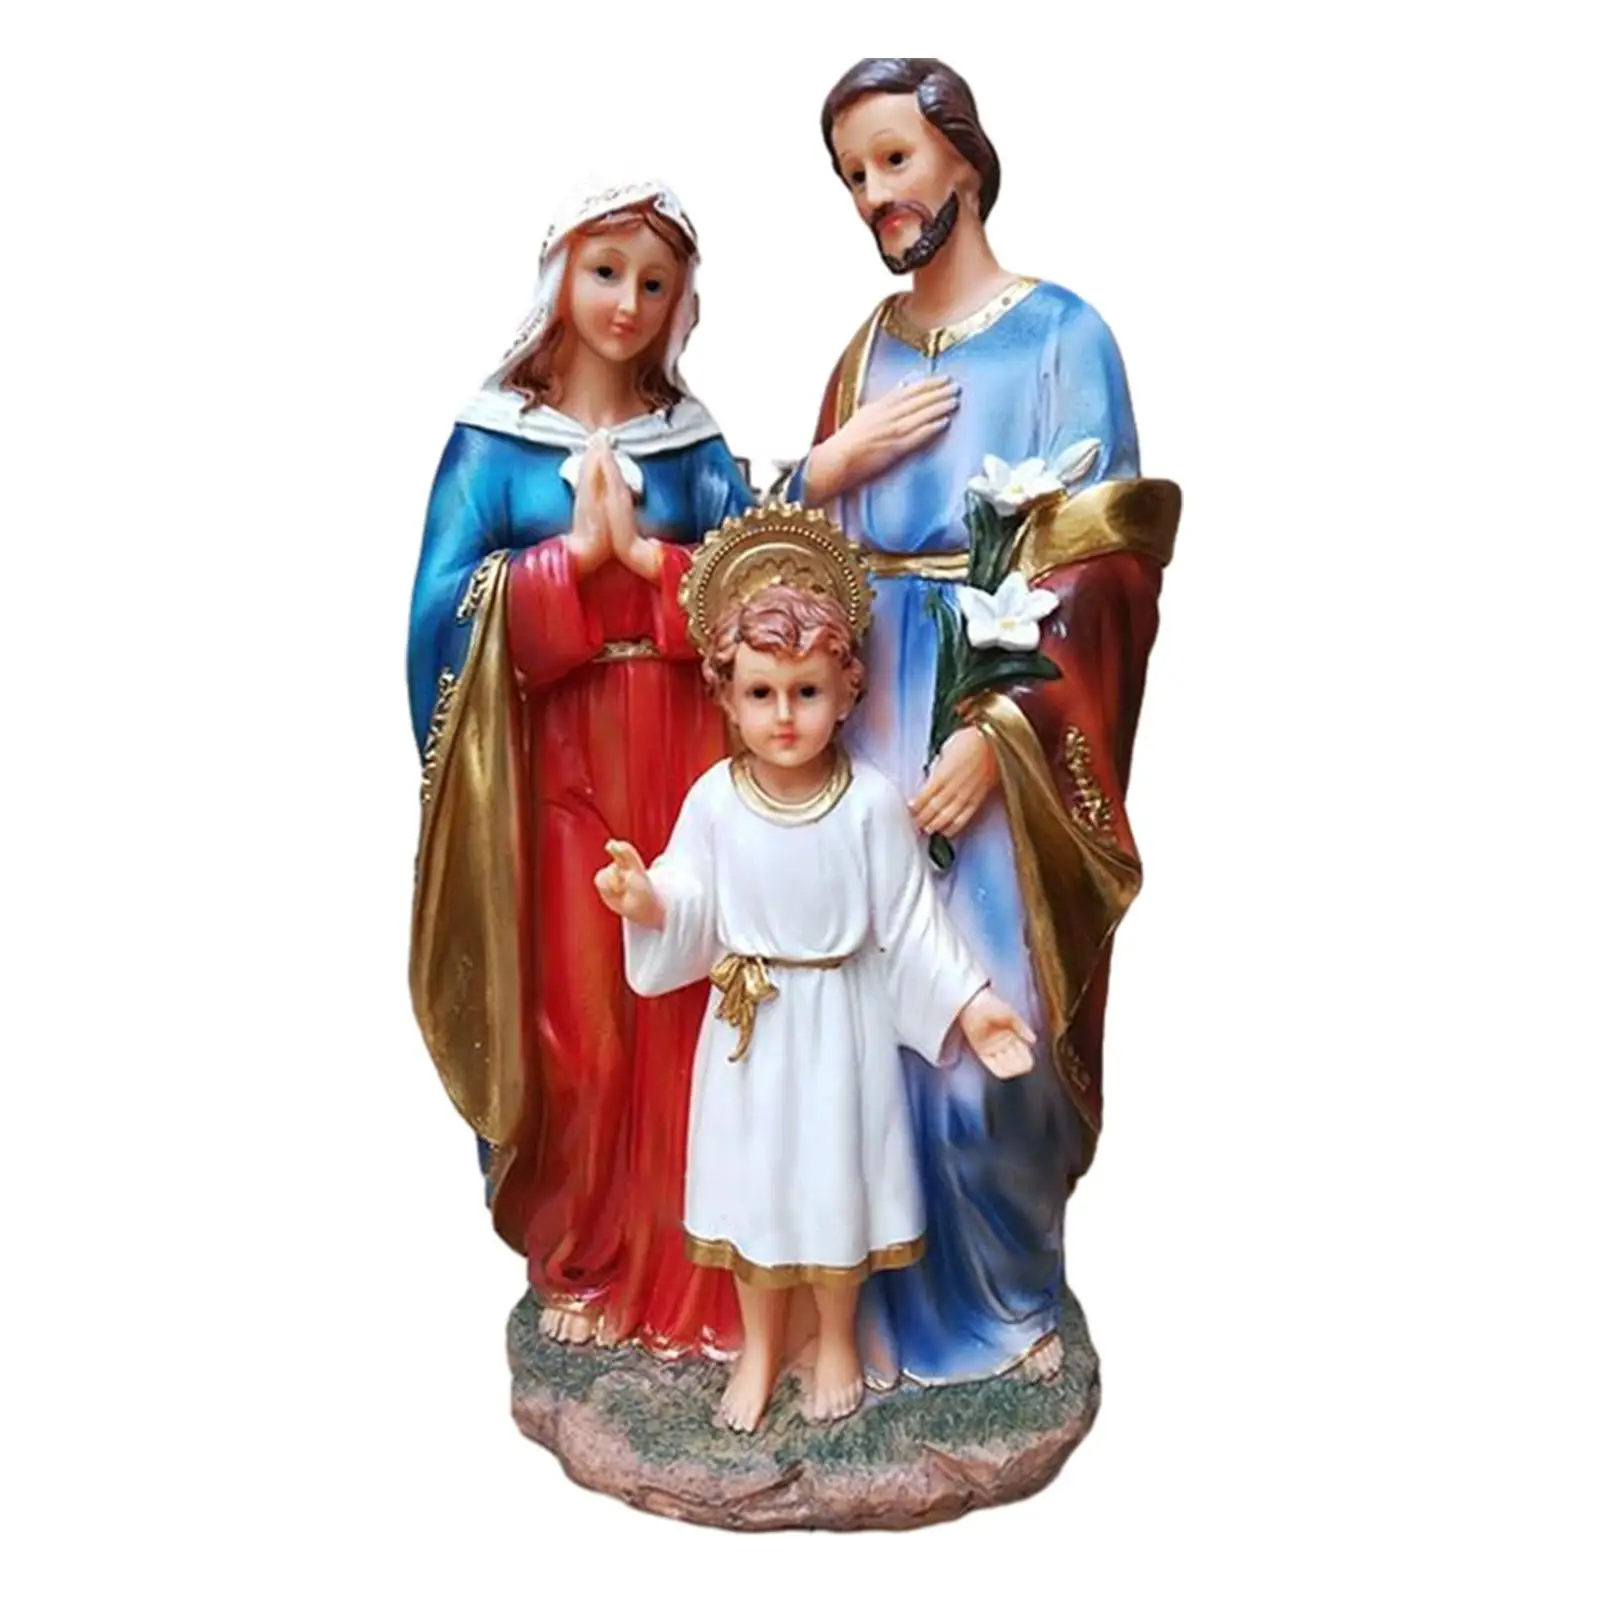 Holy Family Statue Jesus Mary Joseph Figurine Ornament Christian Gifts Virgin Mary Joseph Jesus Figures for Car Interior Desktop